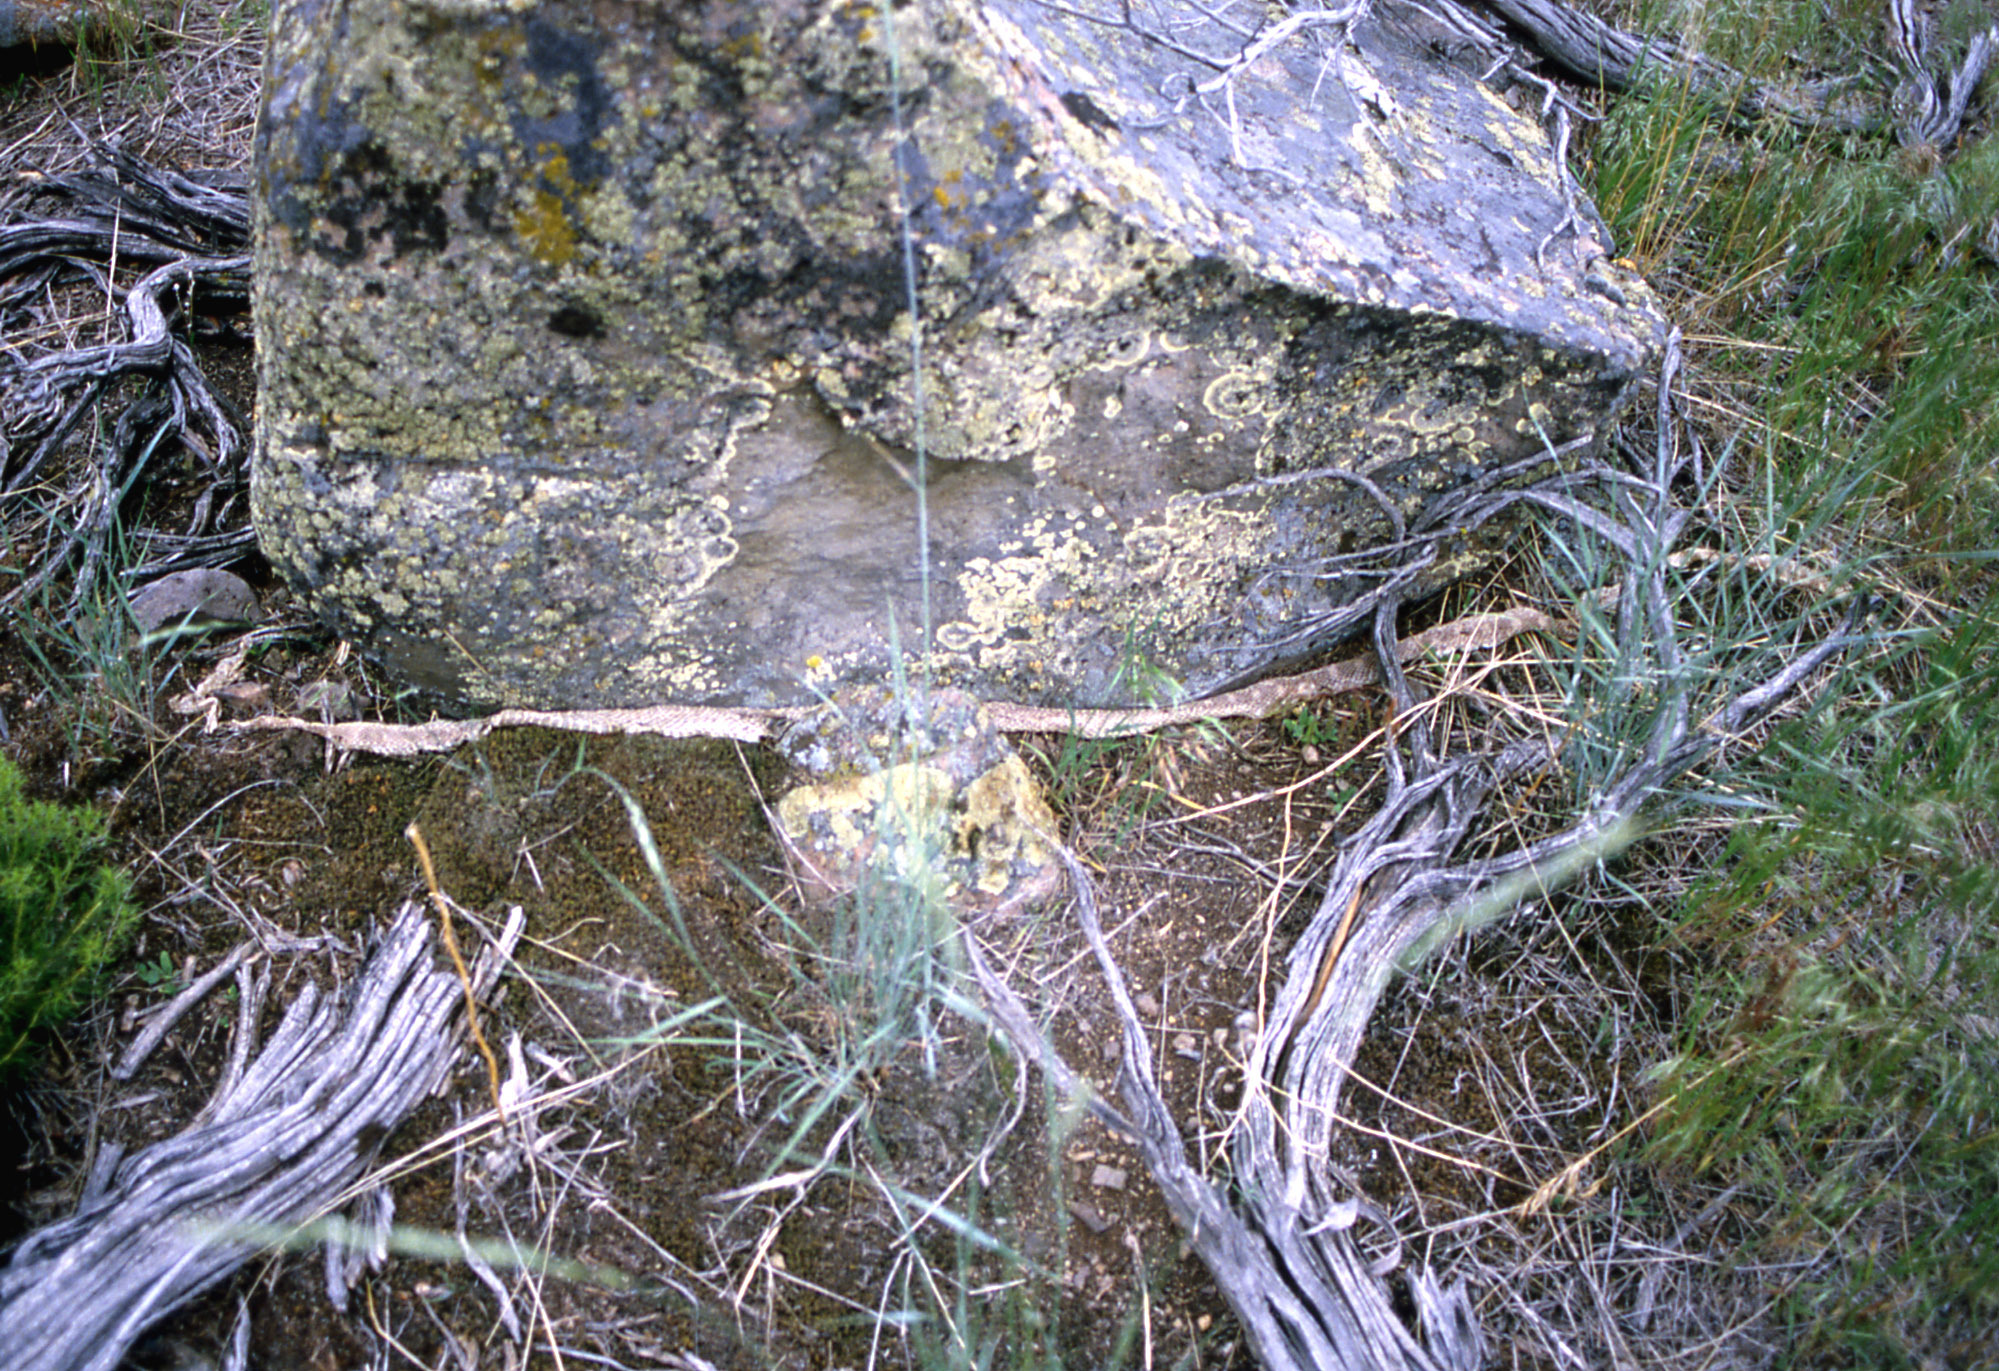 Snake skin lies at the base of a large rock